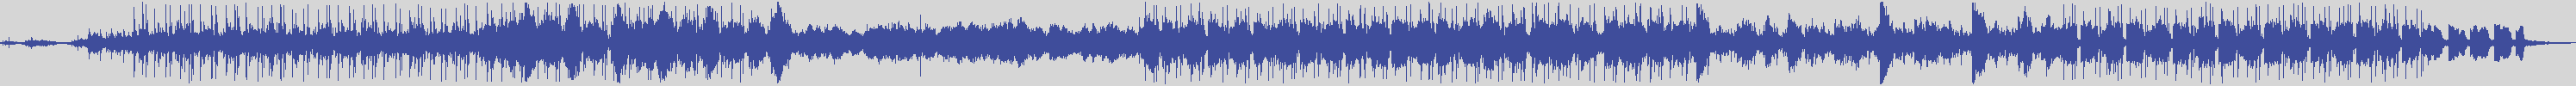 noclouds_chillout [NOC110] Phaser - Deep Waves [Original Mix] audio wave form